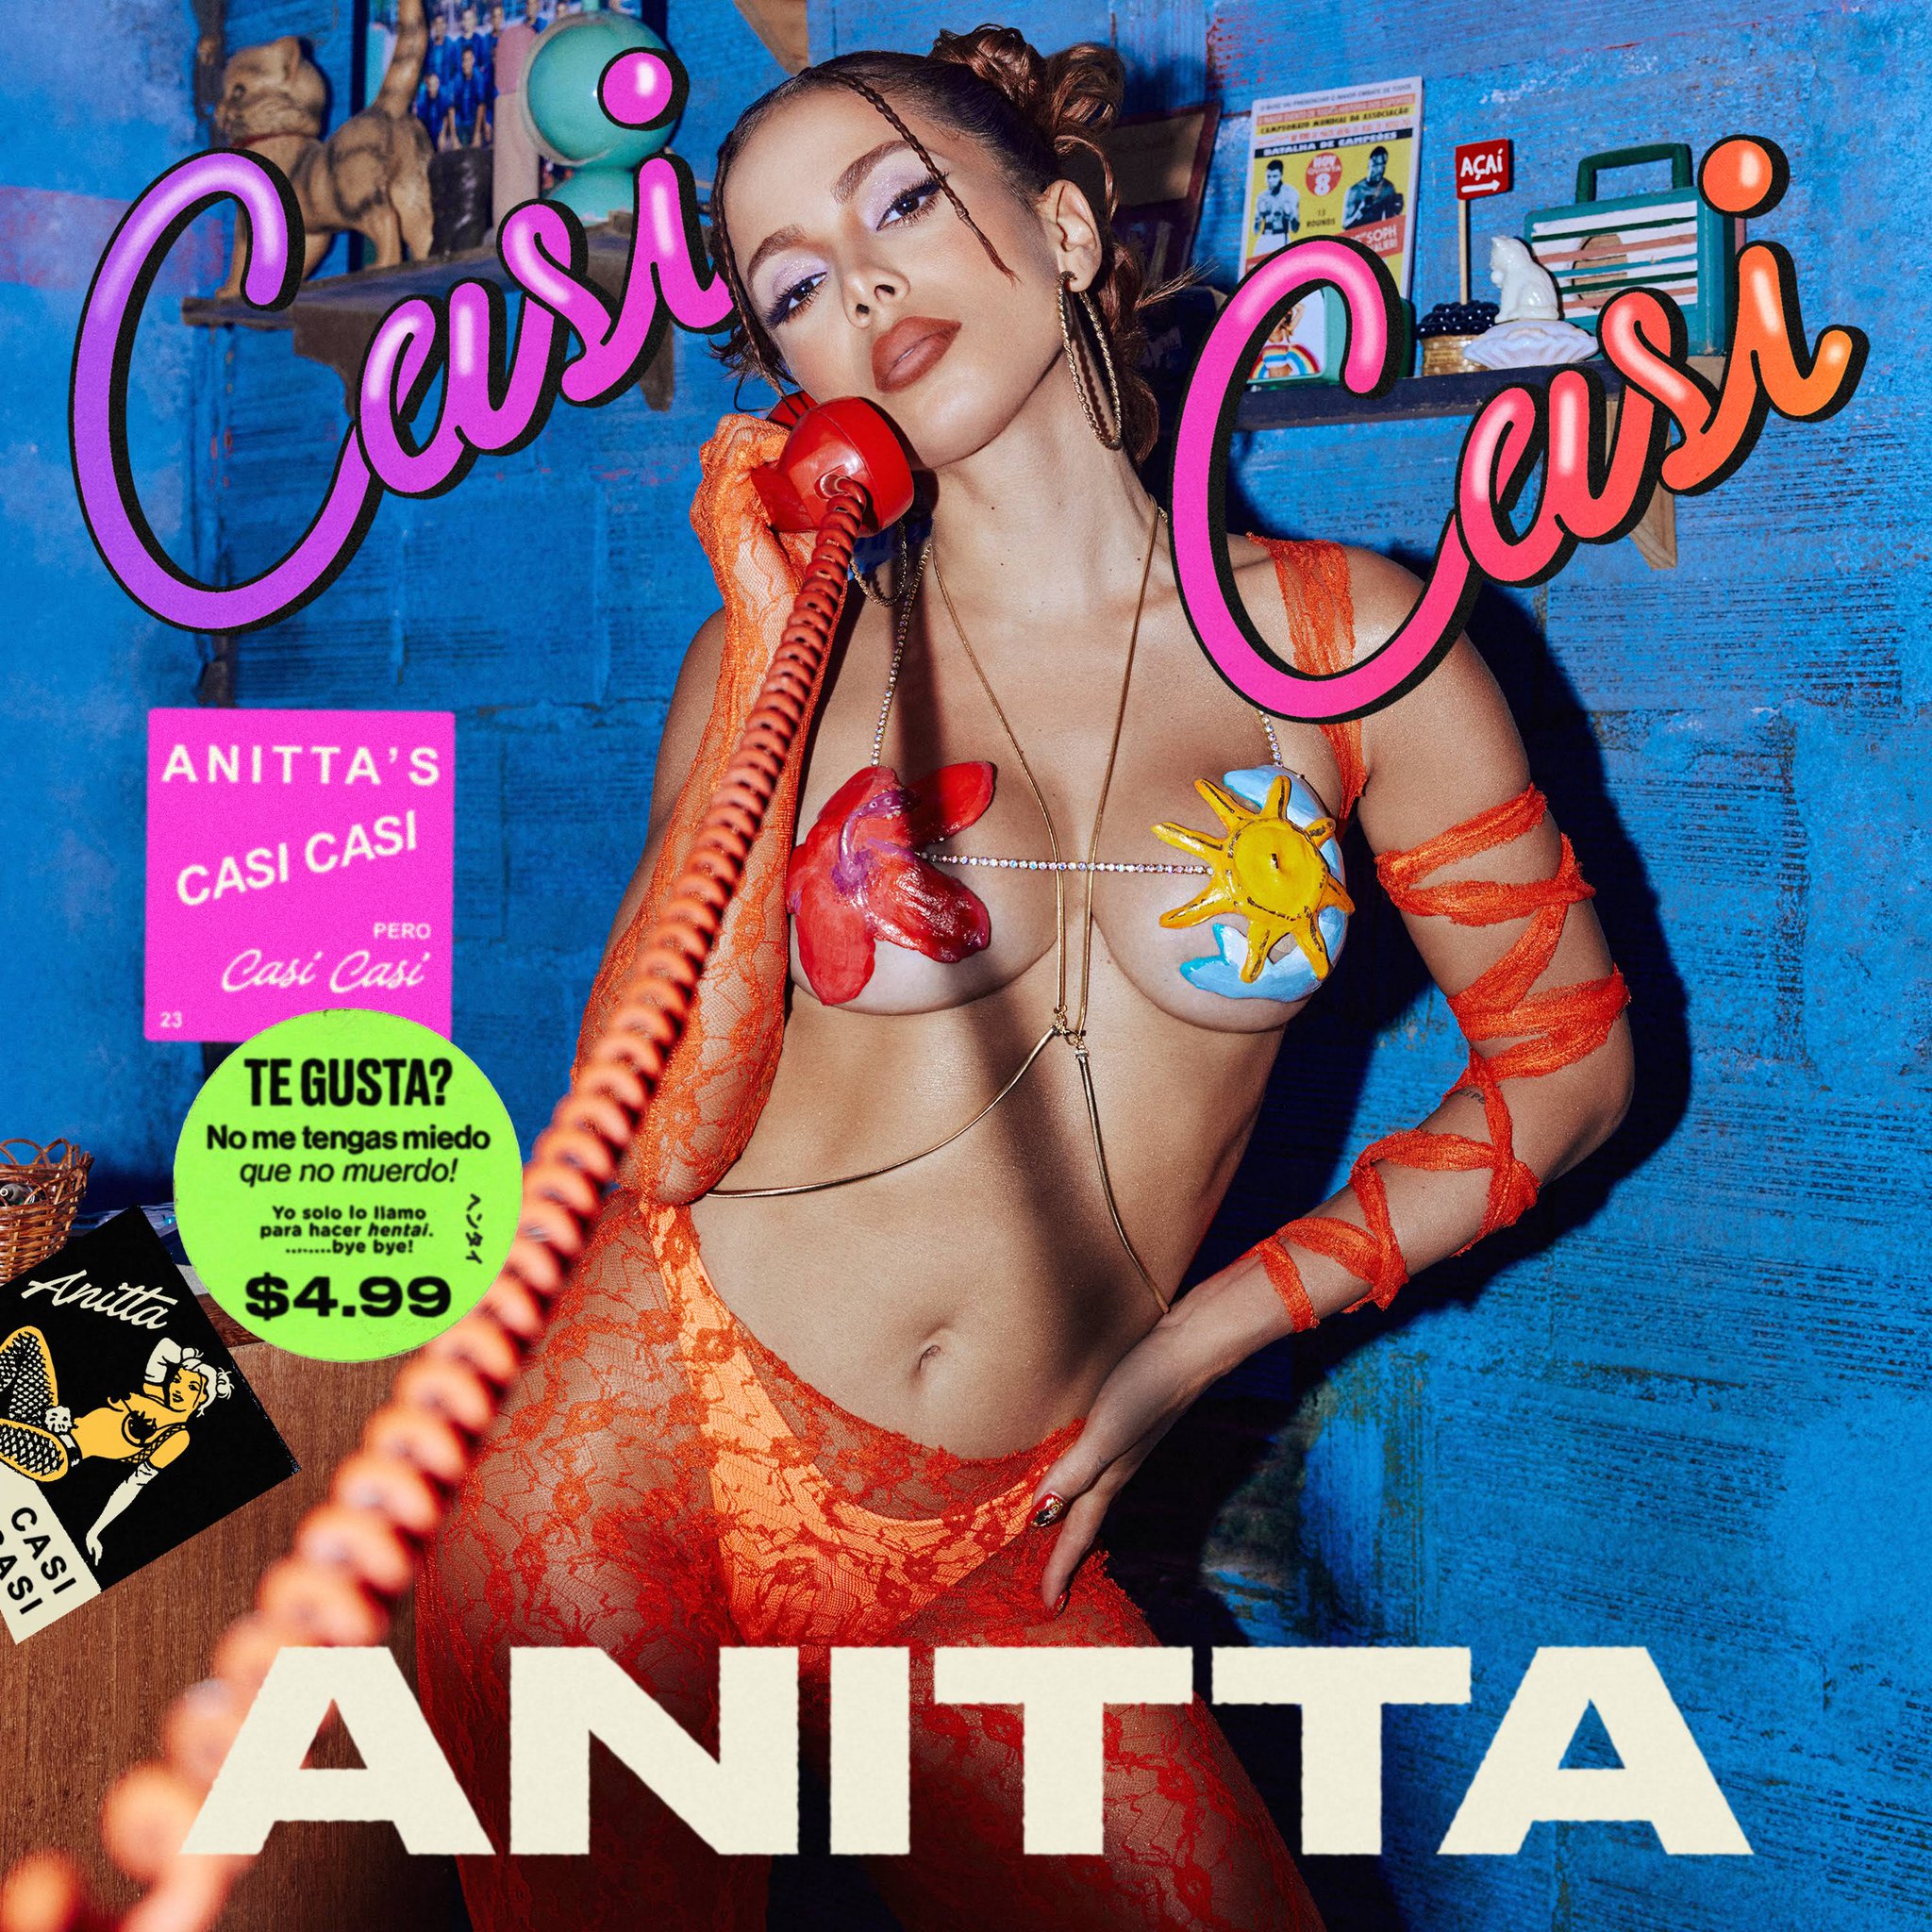 Anitta Casi Casi cover artwork